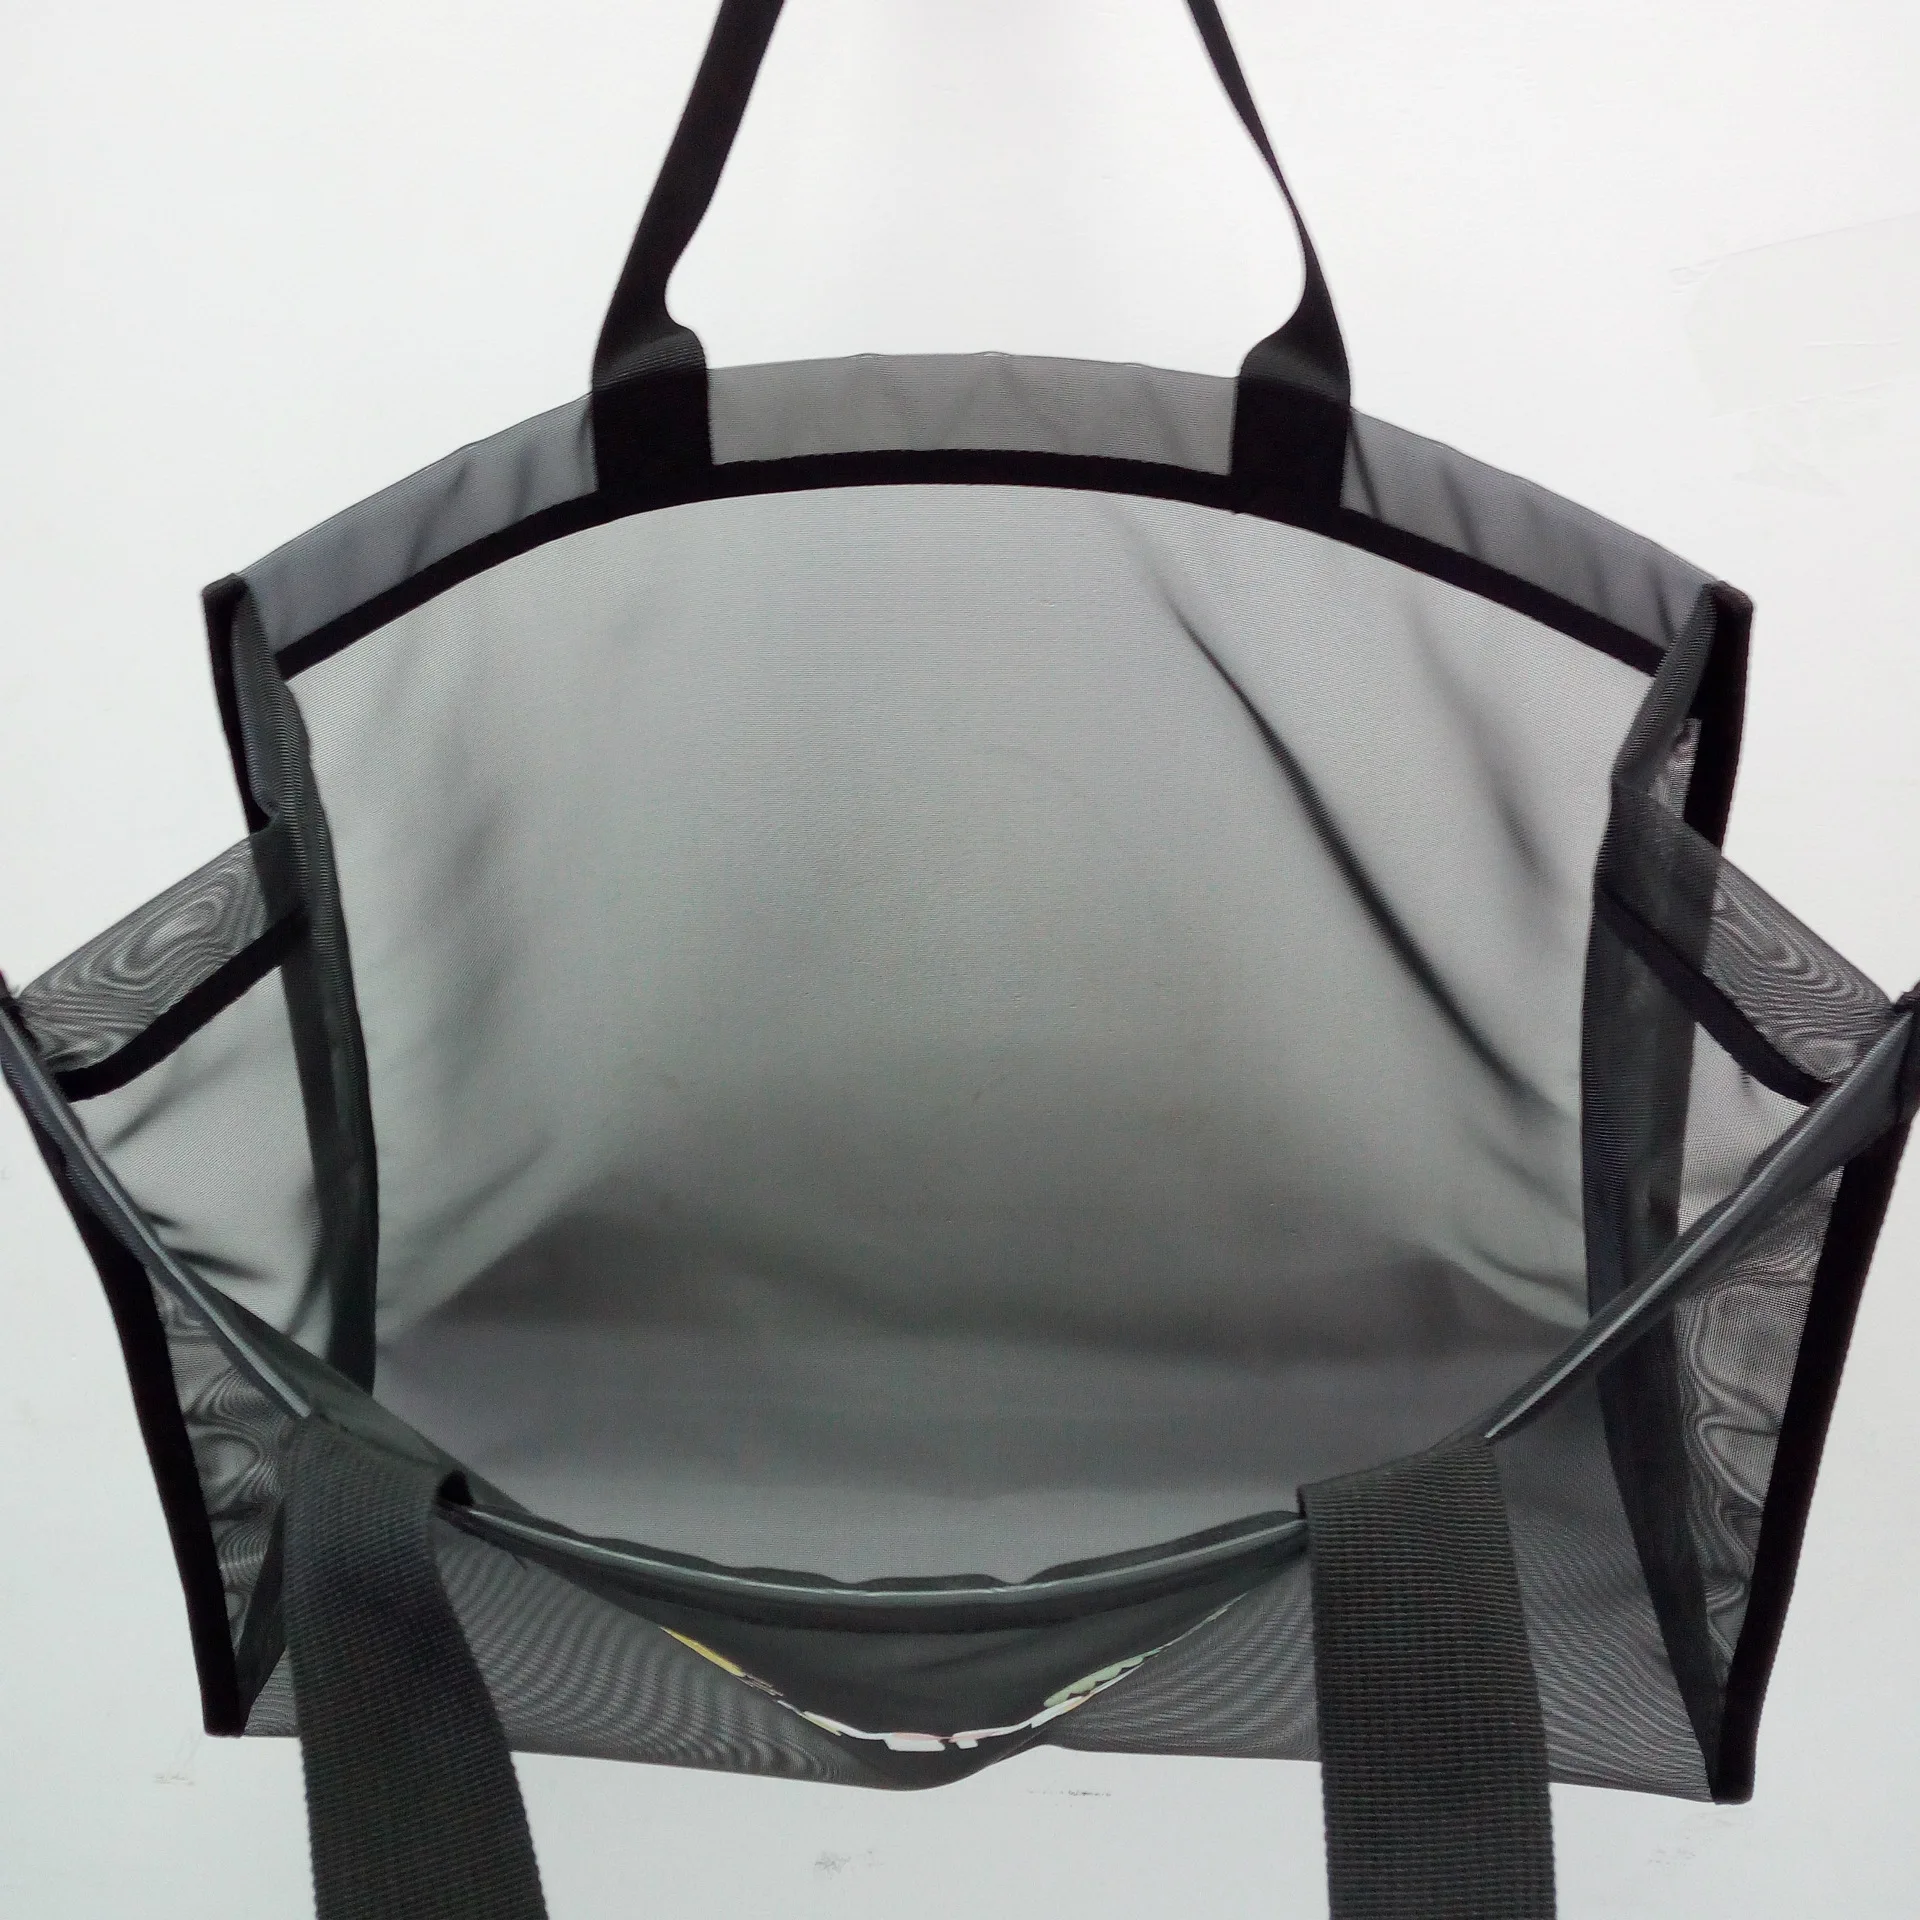 H&m Transparent Nylon Net Bag Mesh Shopping Beach Bag - Buy Nylon ...